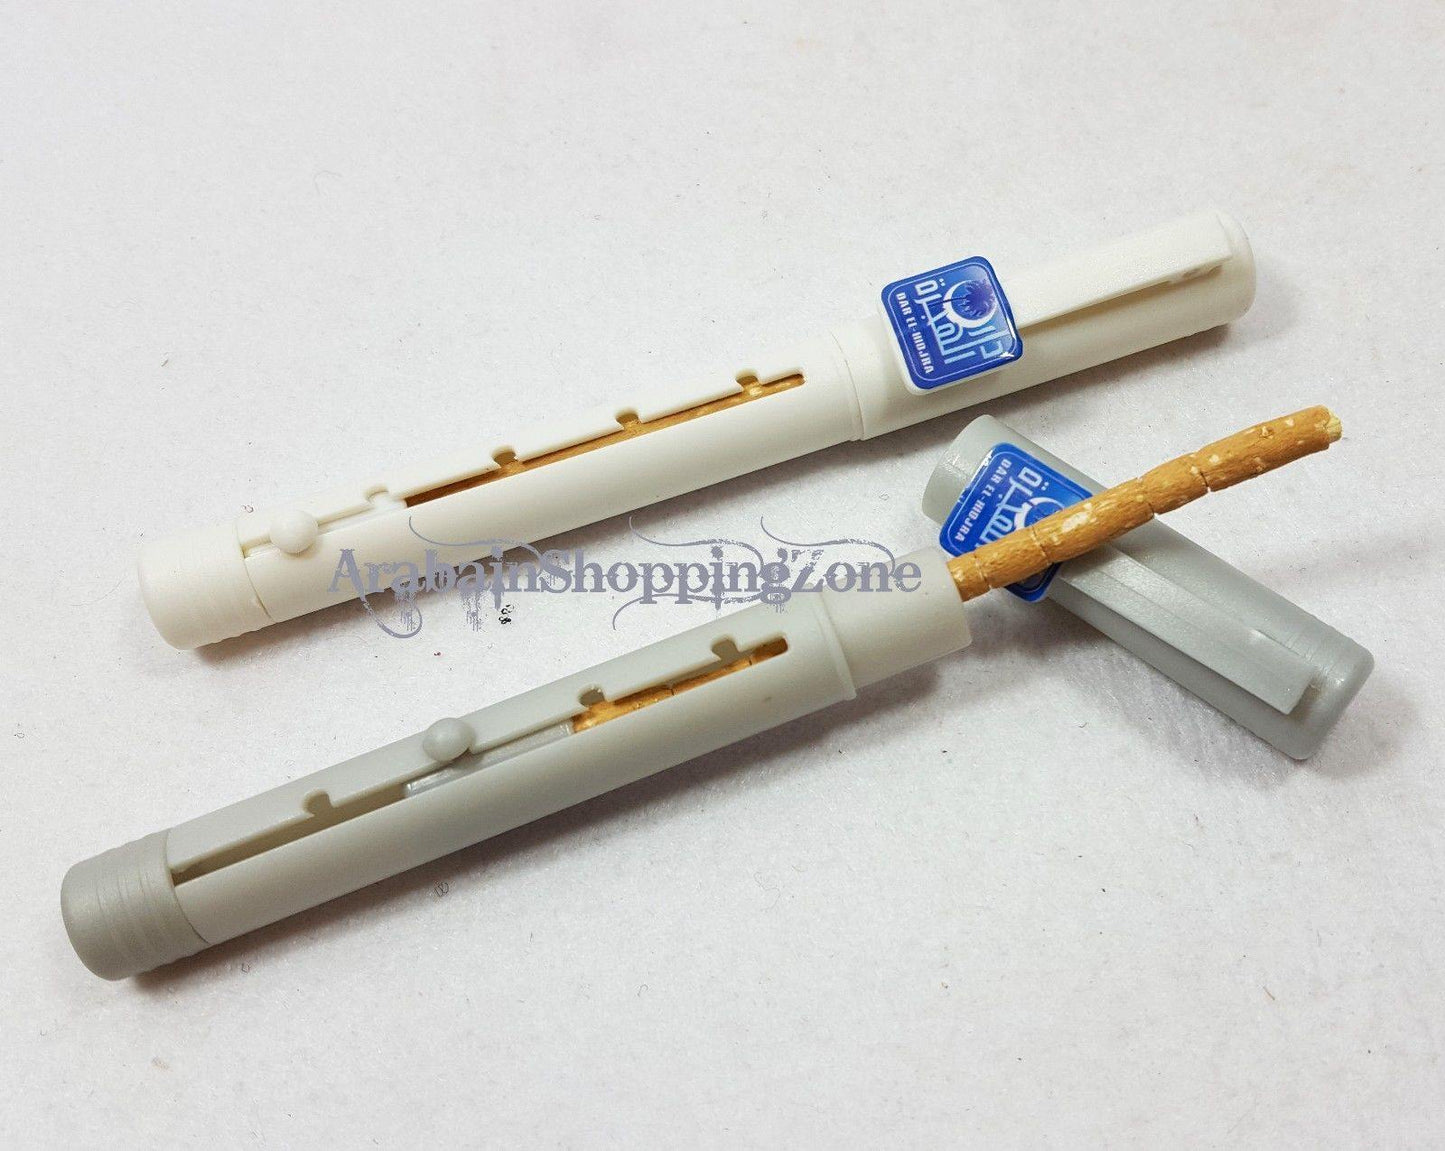 NEW Miswak siwak Natural Herbal Toothbrush Siwak with Step Holder - Arabian Shopping Zone